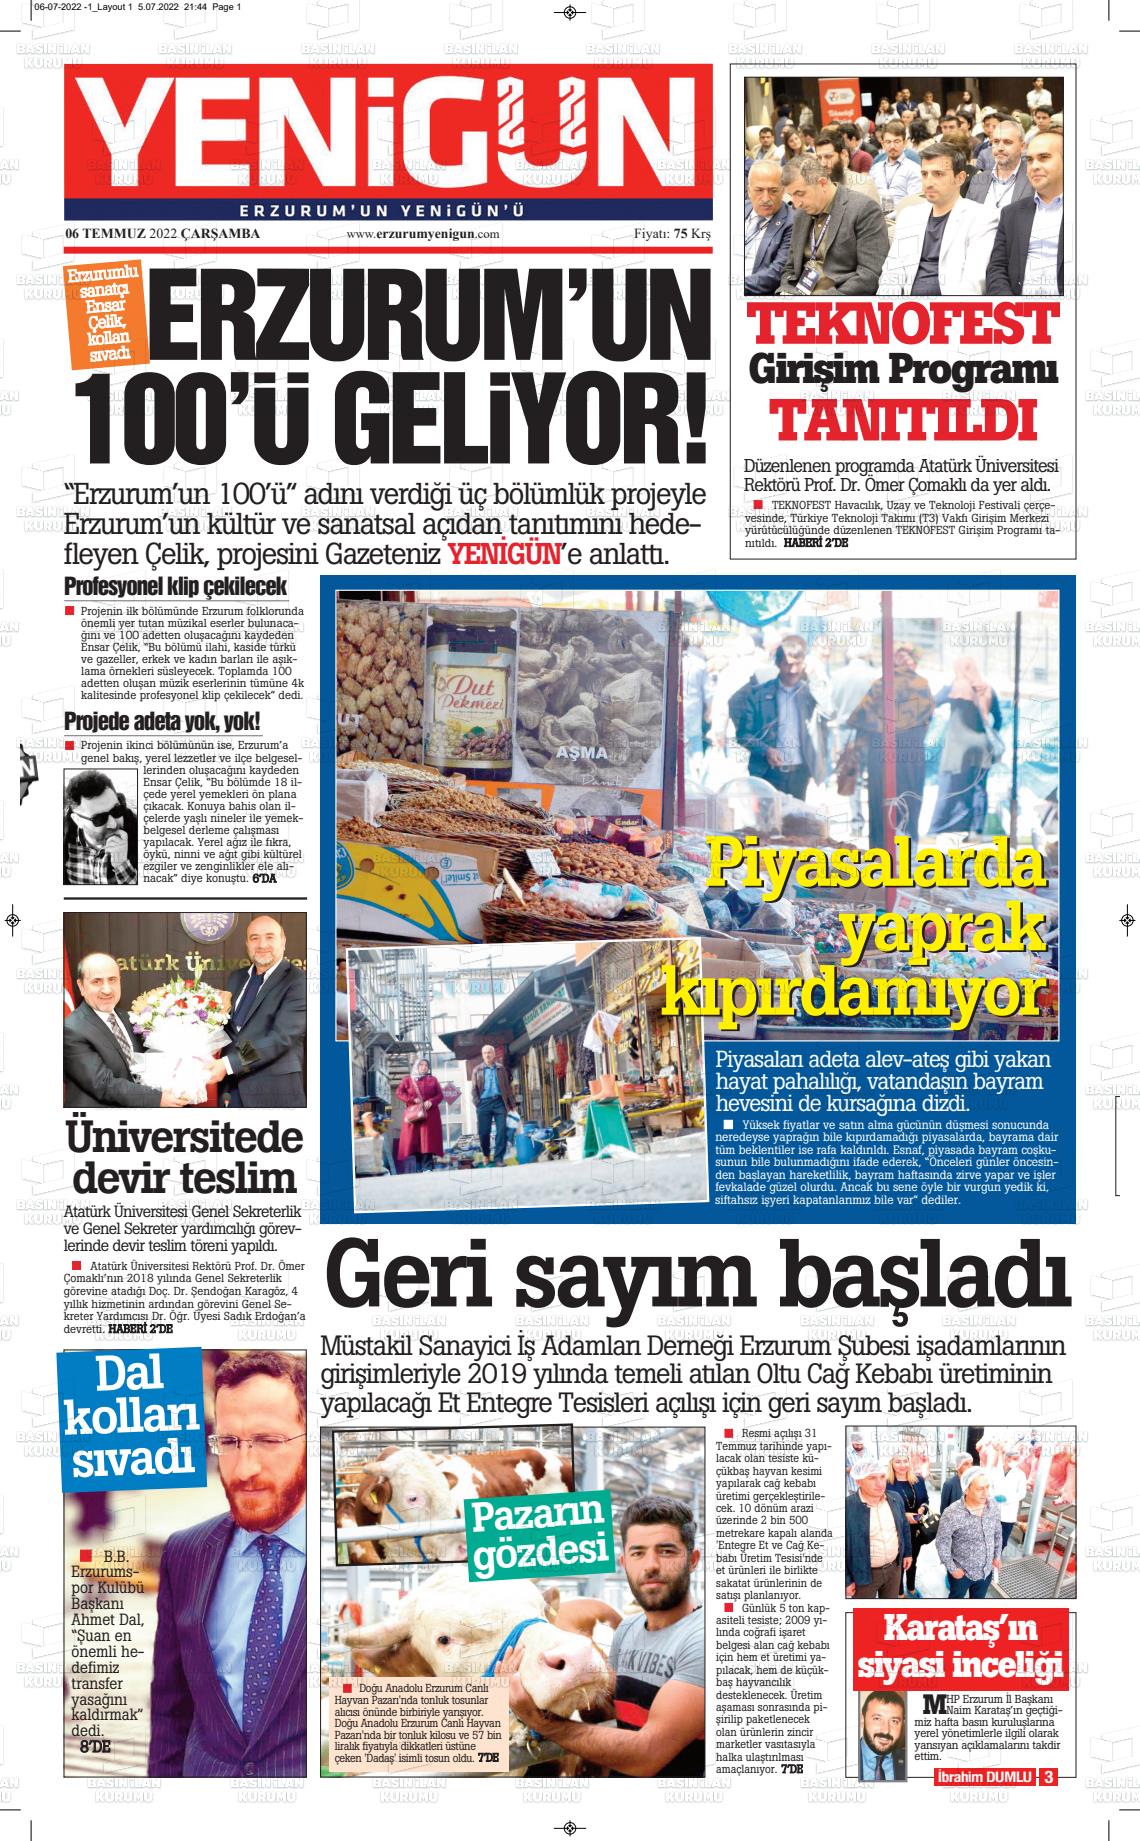 06 Temmuz 2022 Erzurum Yenigün Gazete Manşeti